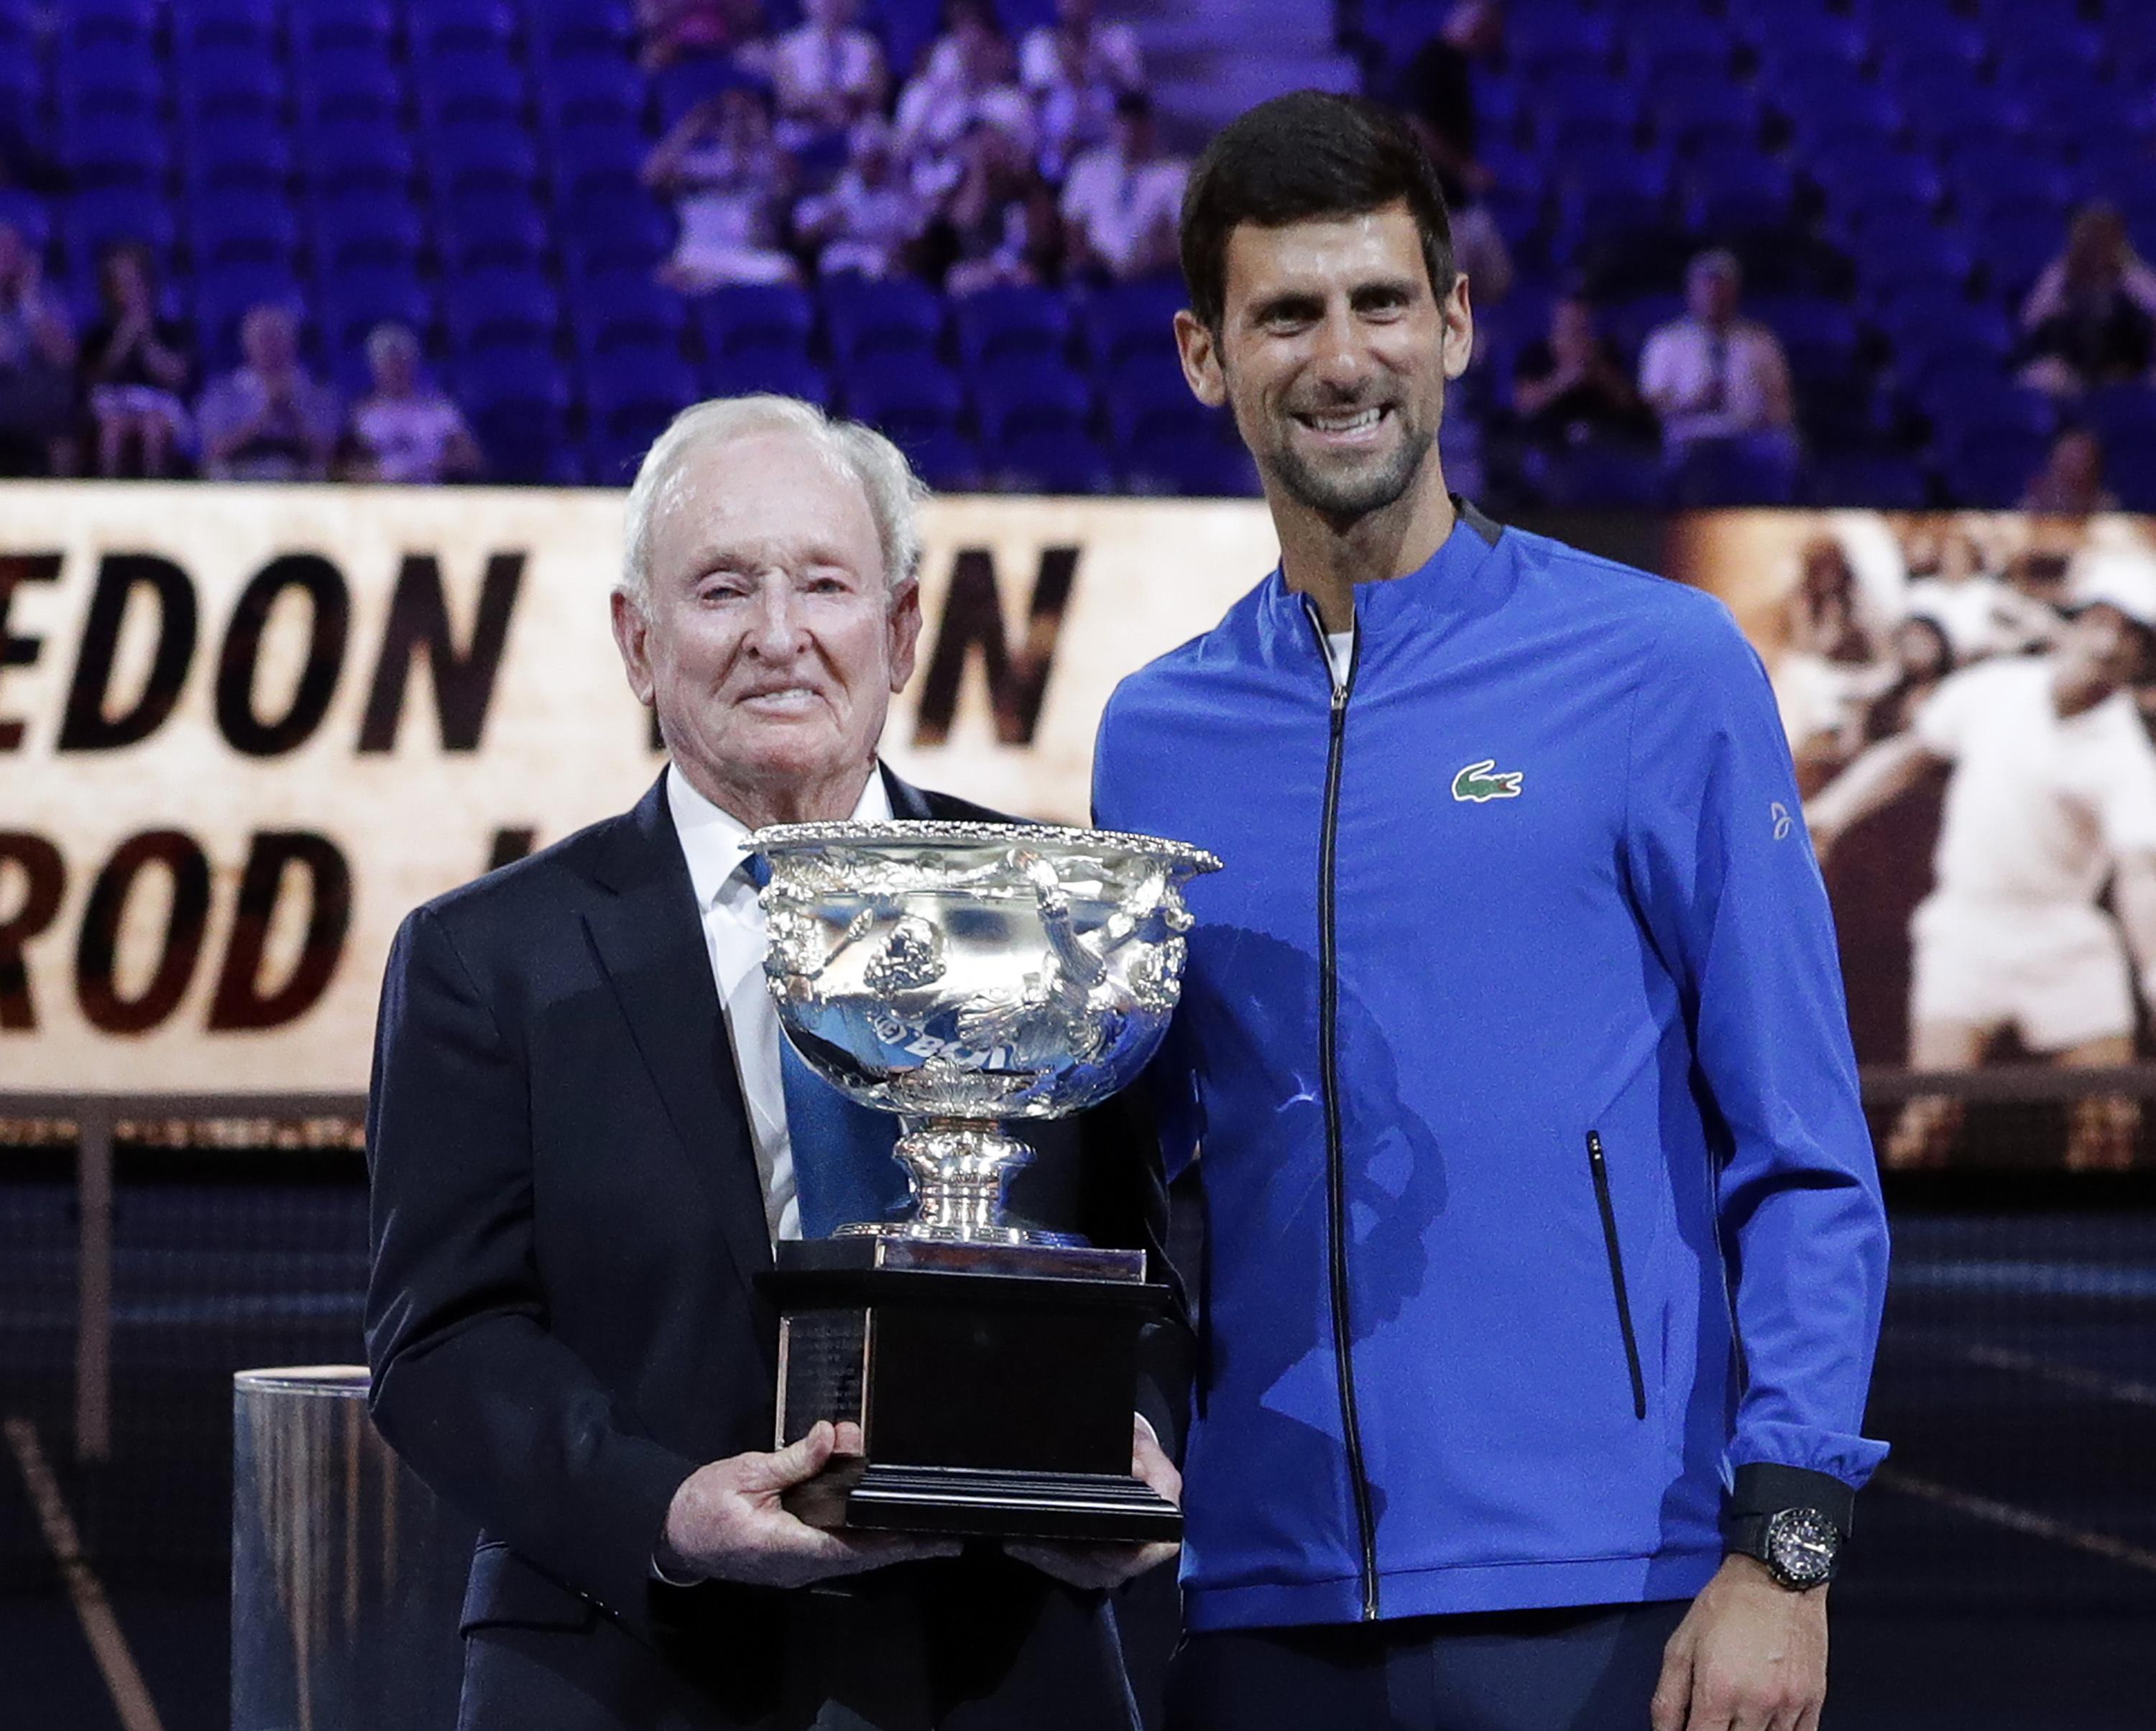 Laver would Djokovic to calendar Grand Slam AP News